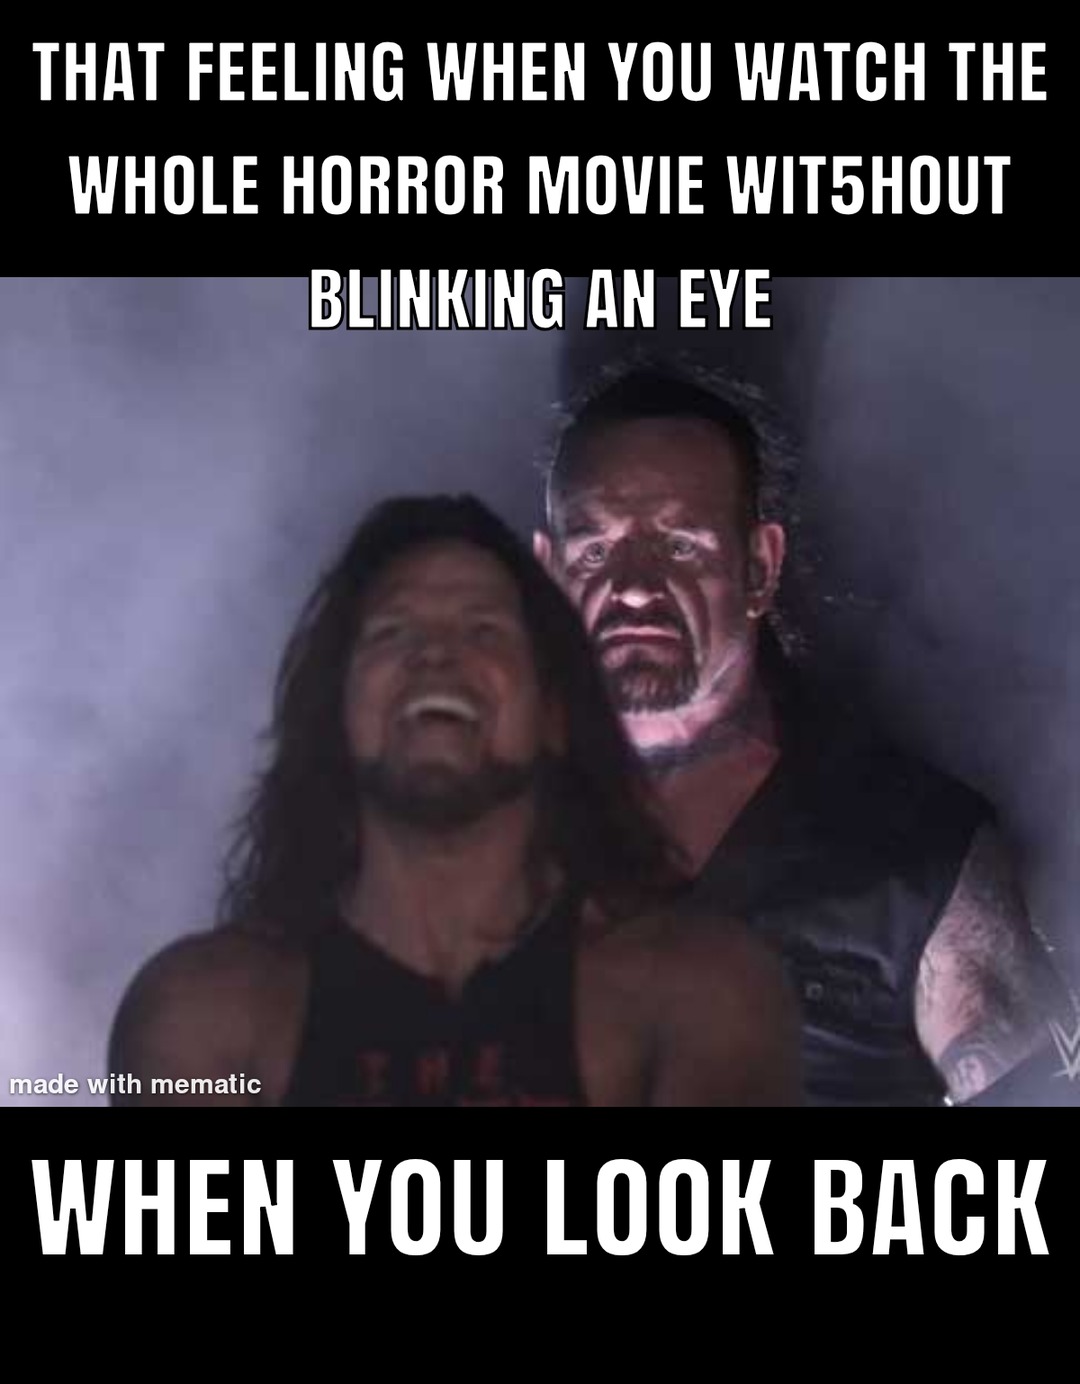 horror movies - meme